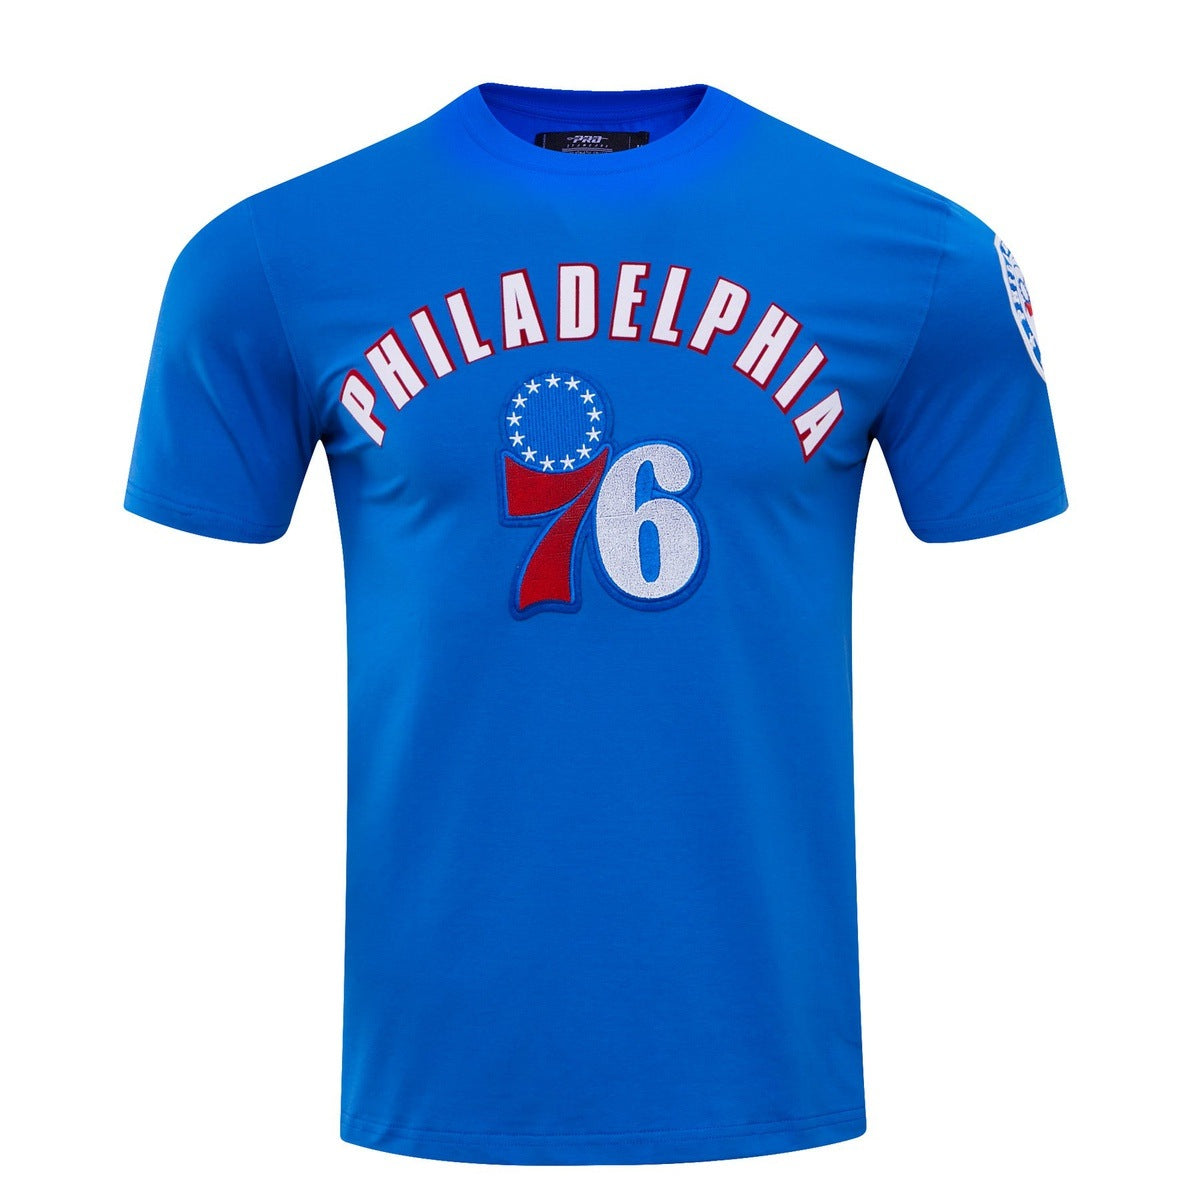 NBA PHILADELPHIA 76ERS CLASSIC BRISTLE MEN'S TEE (ROYAL BLUE)